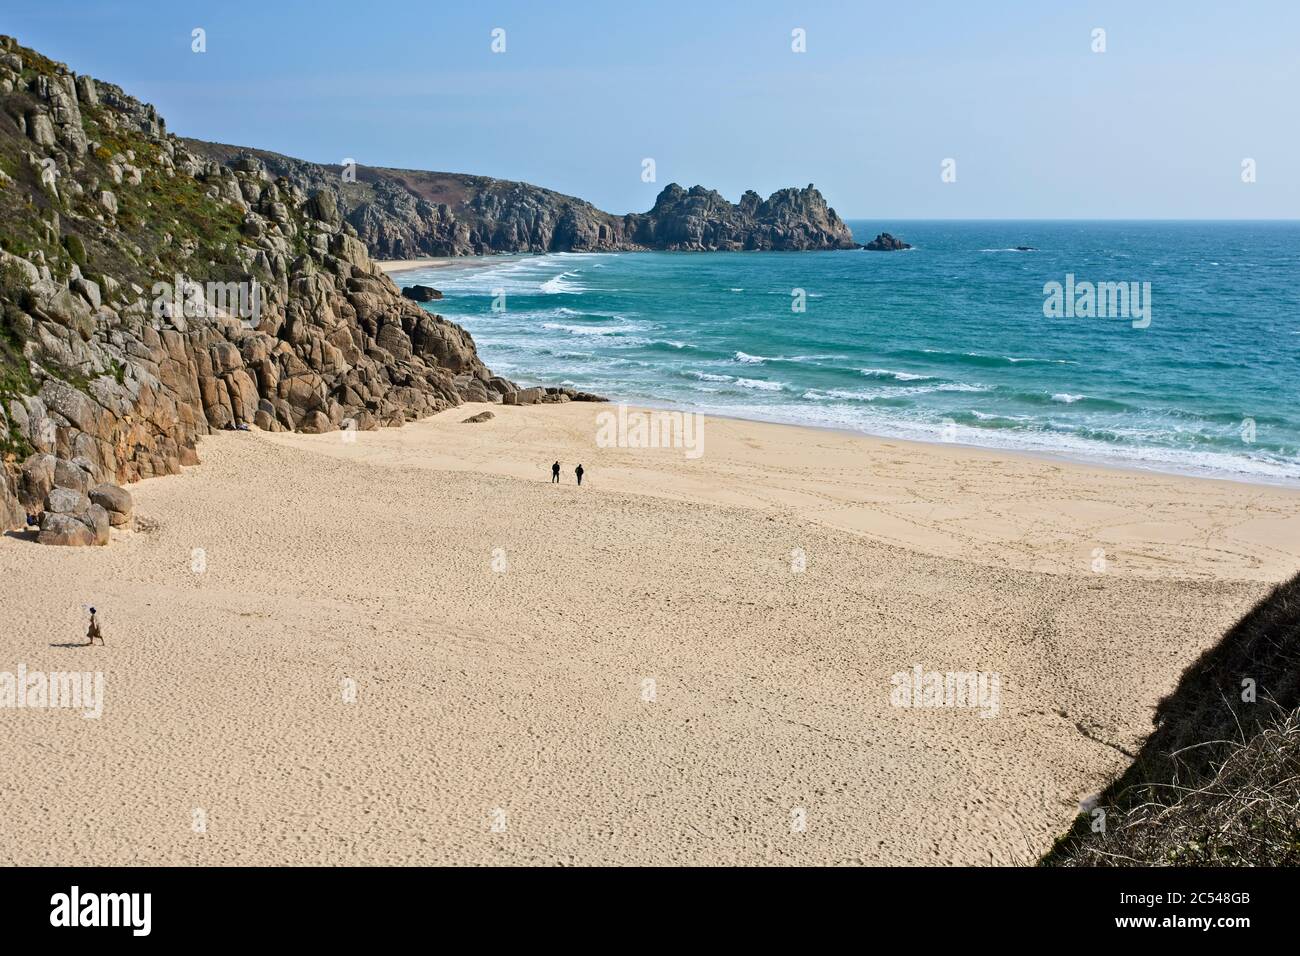 Porthcurno beach and Logan's Rock, Cornwall, England, UK. Stock Photo